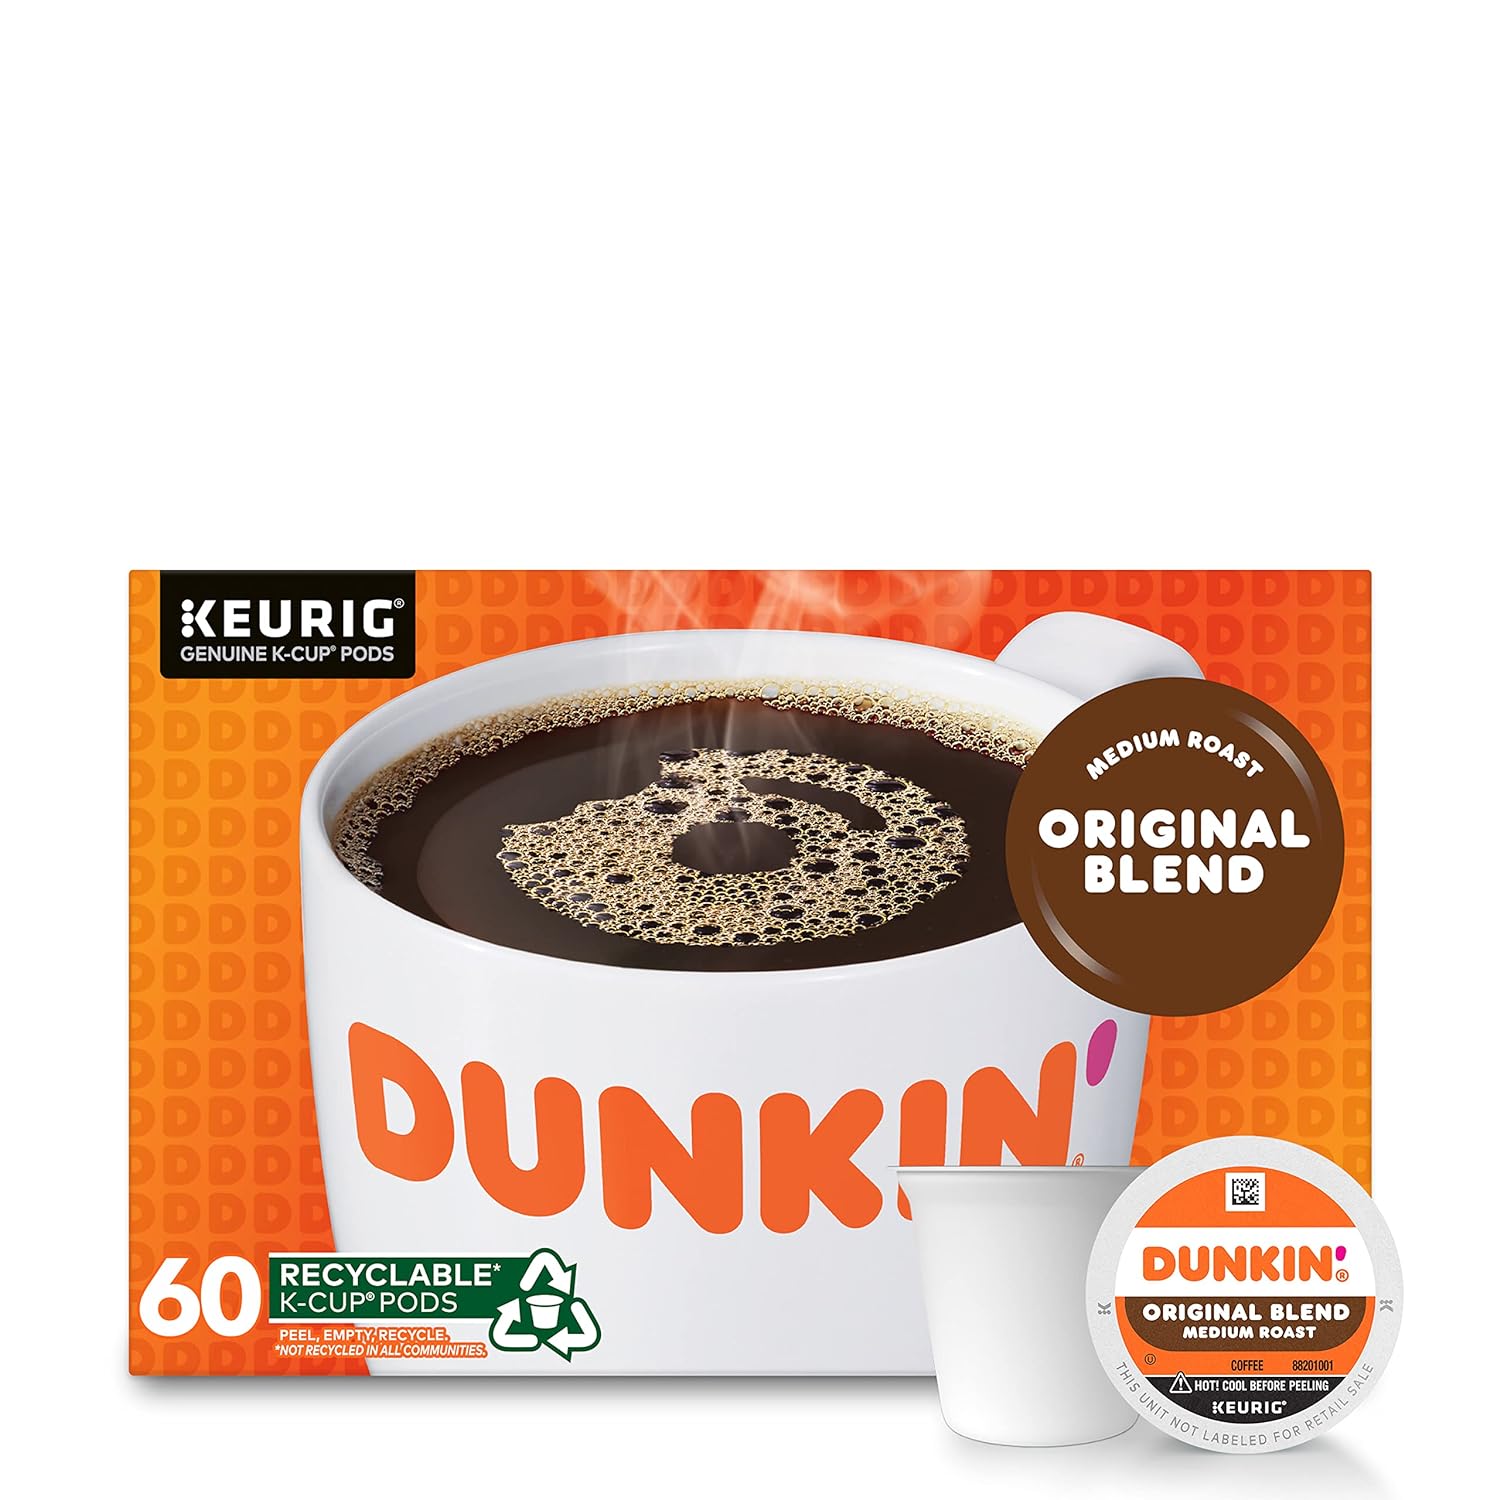 Dunkin' Original Blend Coffee Review | Morning Coffee Journal